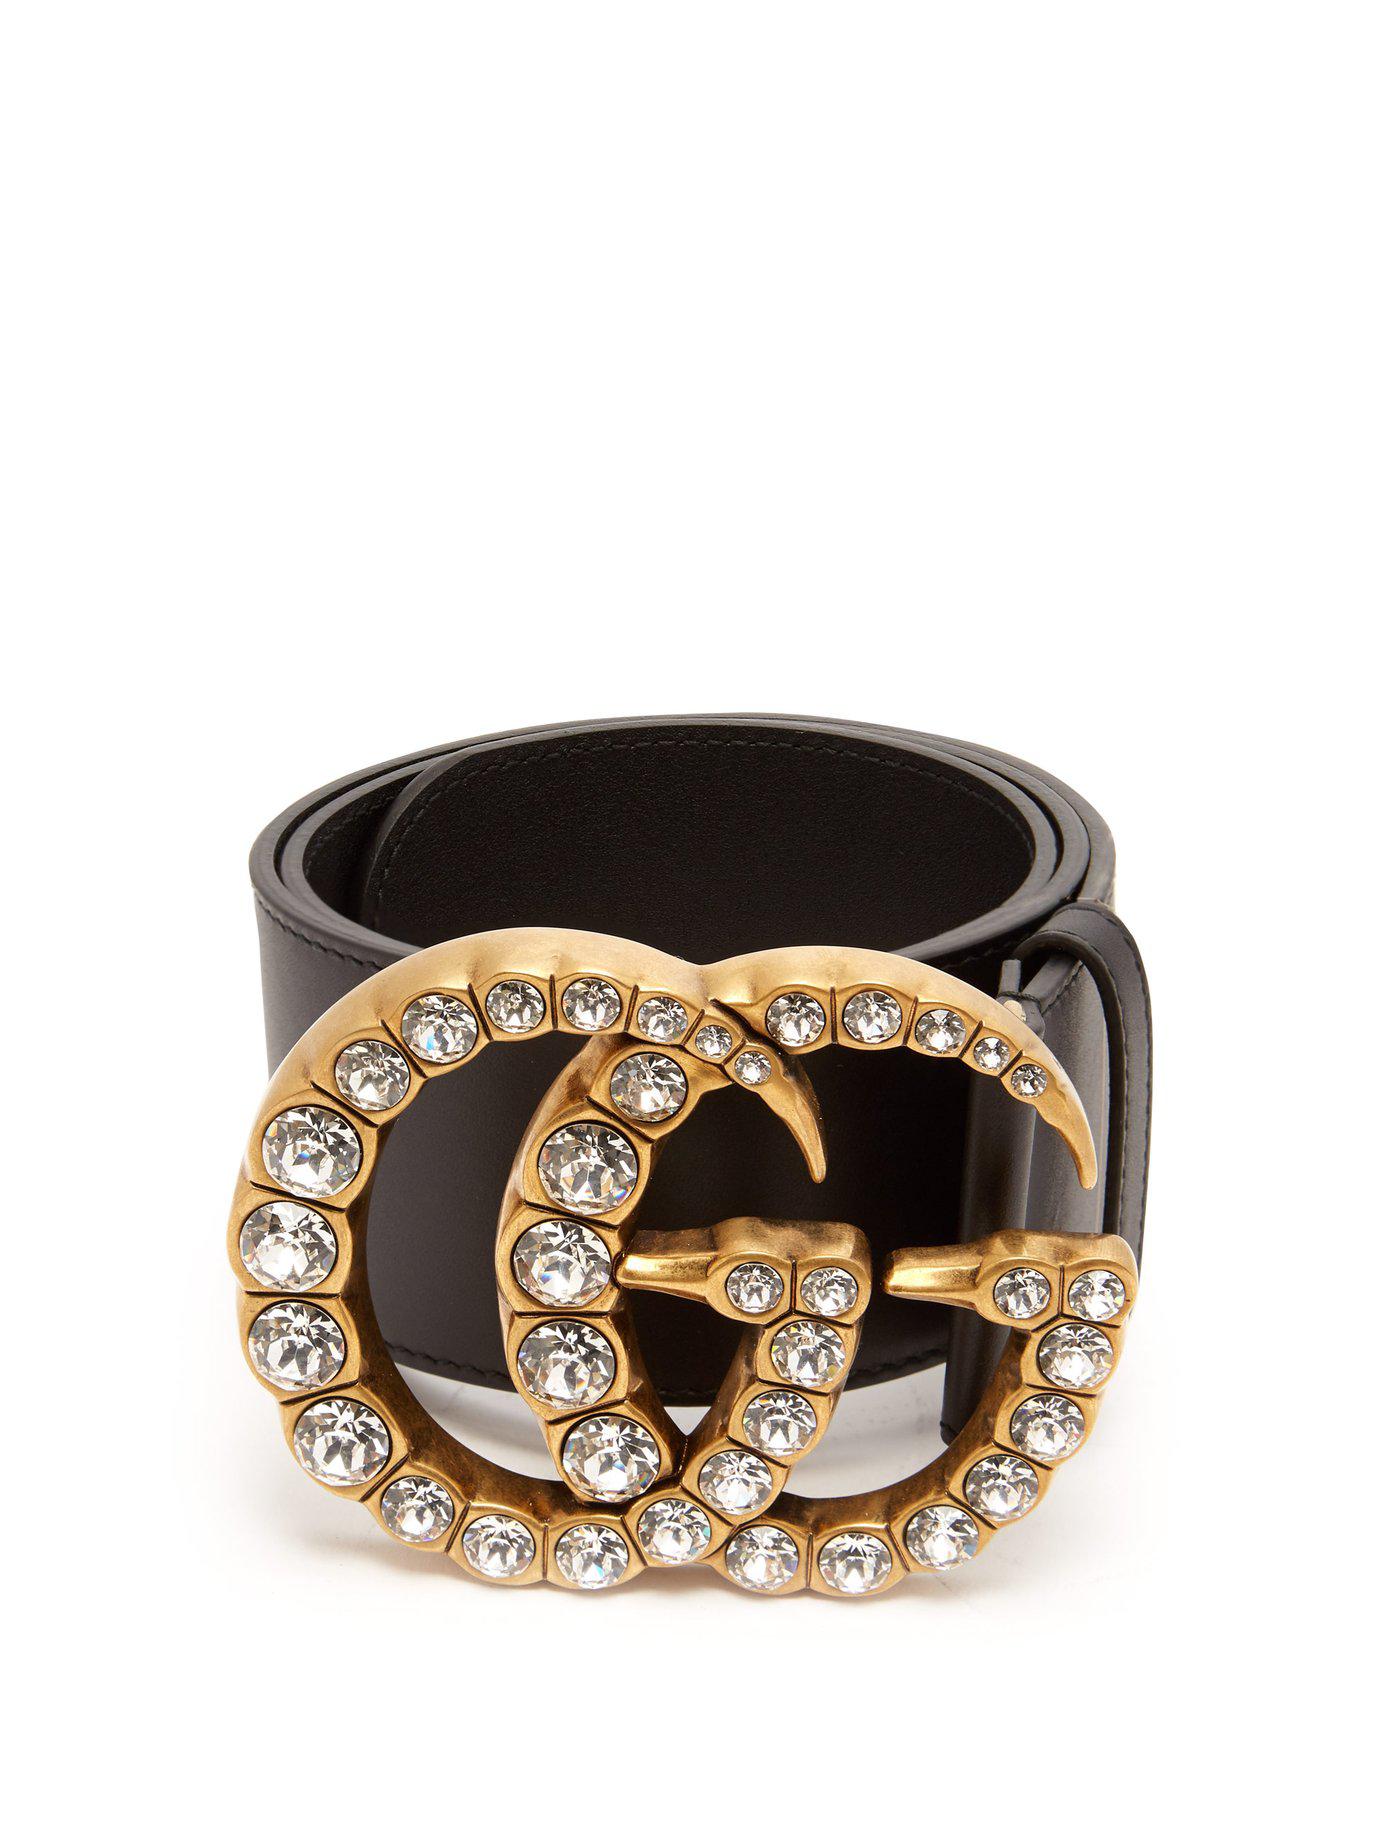 Gucci Tweed Crystal Embellished Gg Logo Leather Belt in Black - Lyst